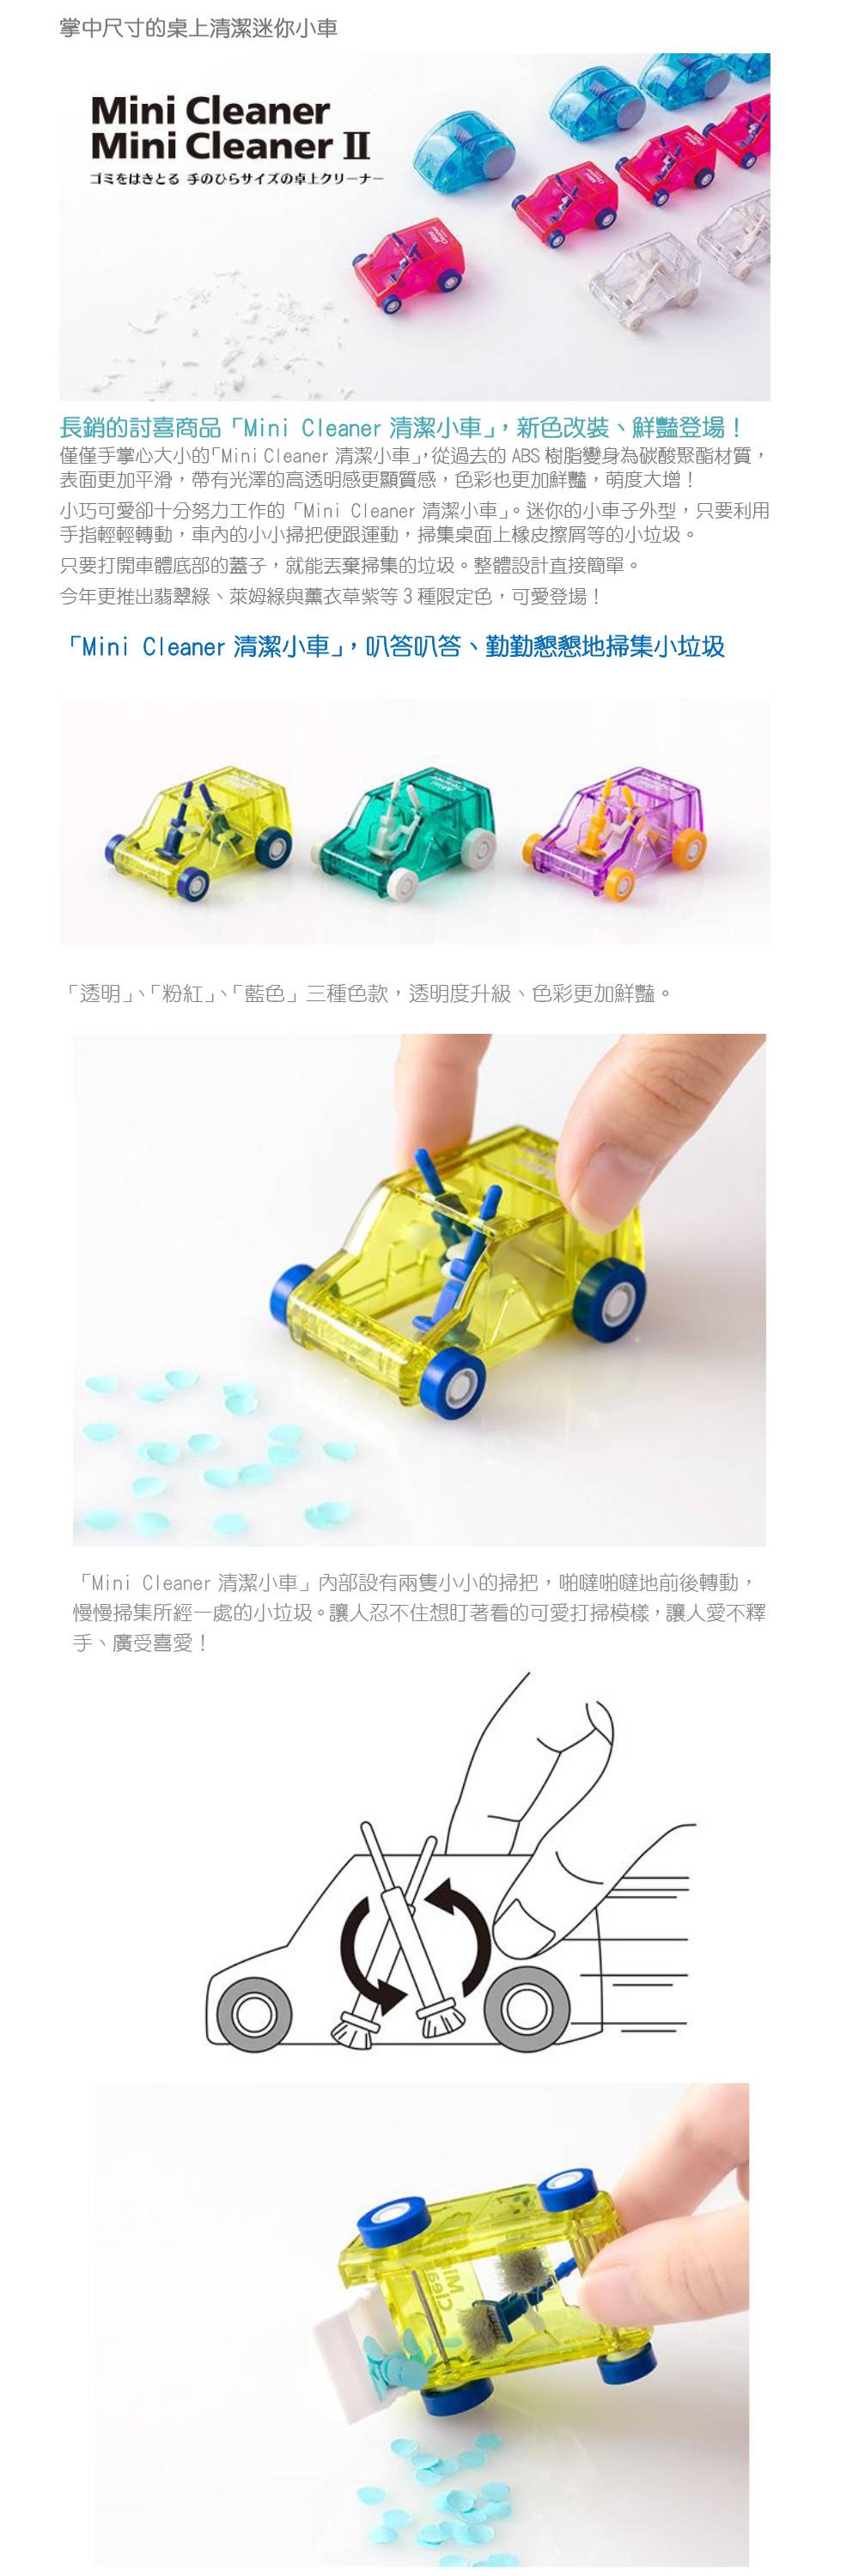 Mini-Cleaner清潔小車II-限定色2019_01.jpg